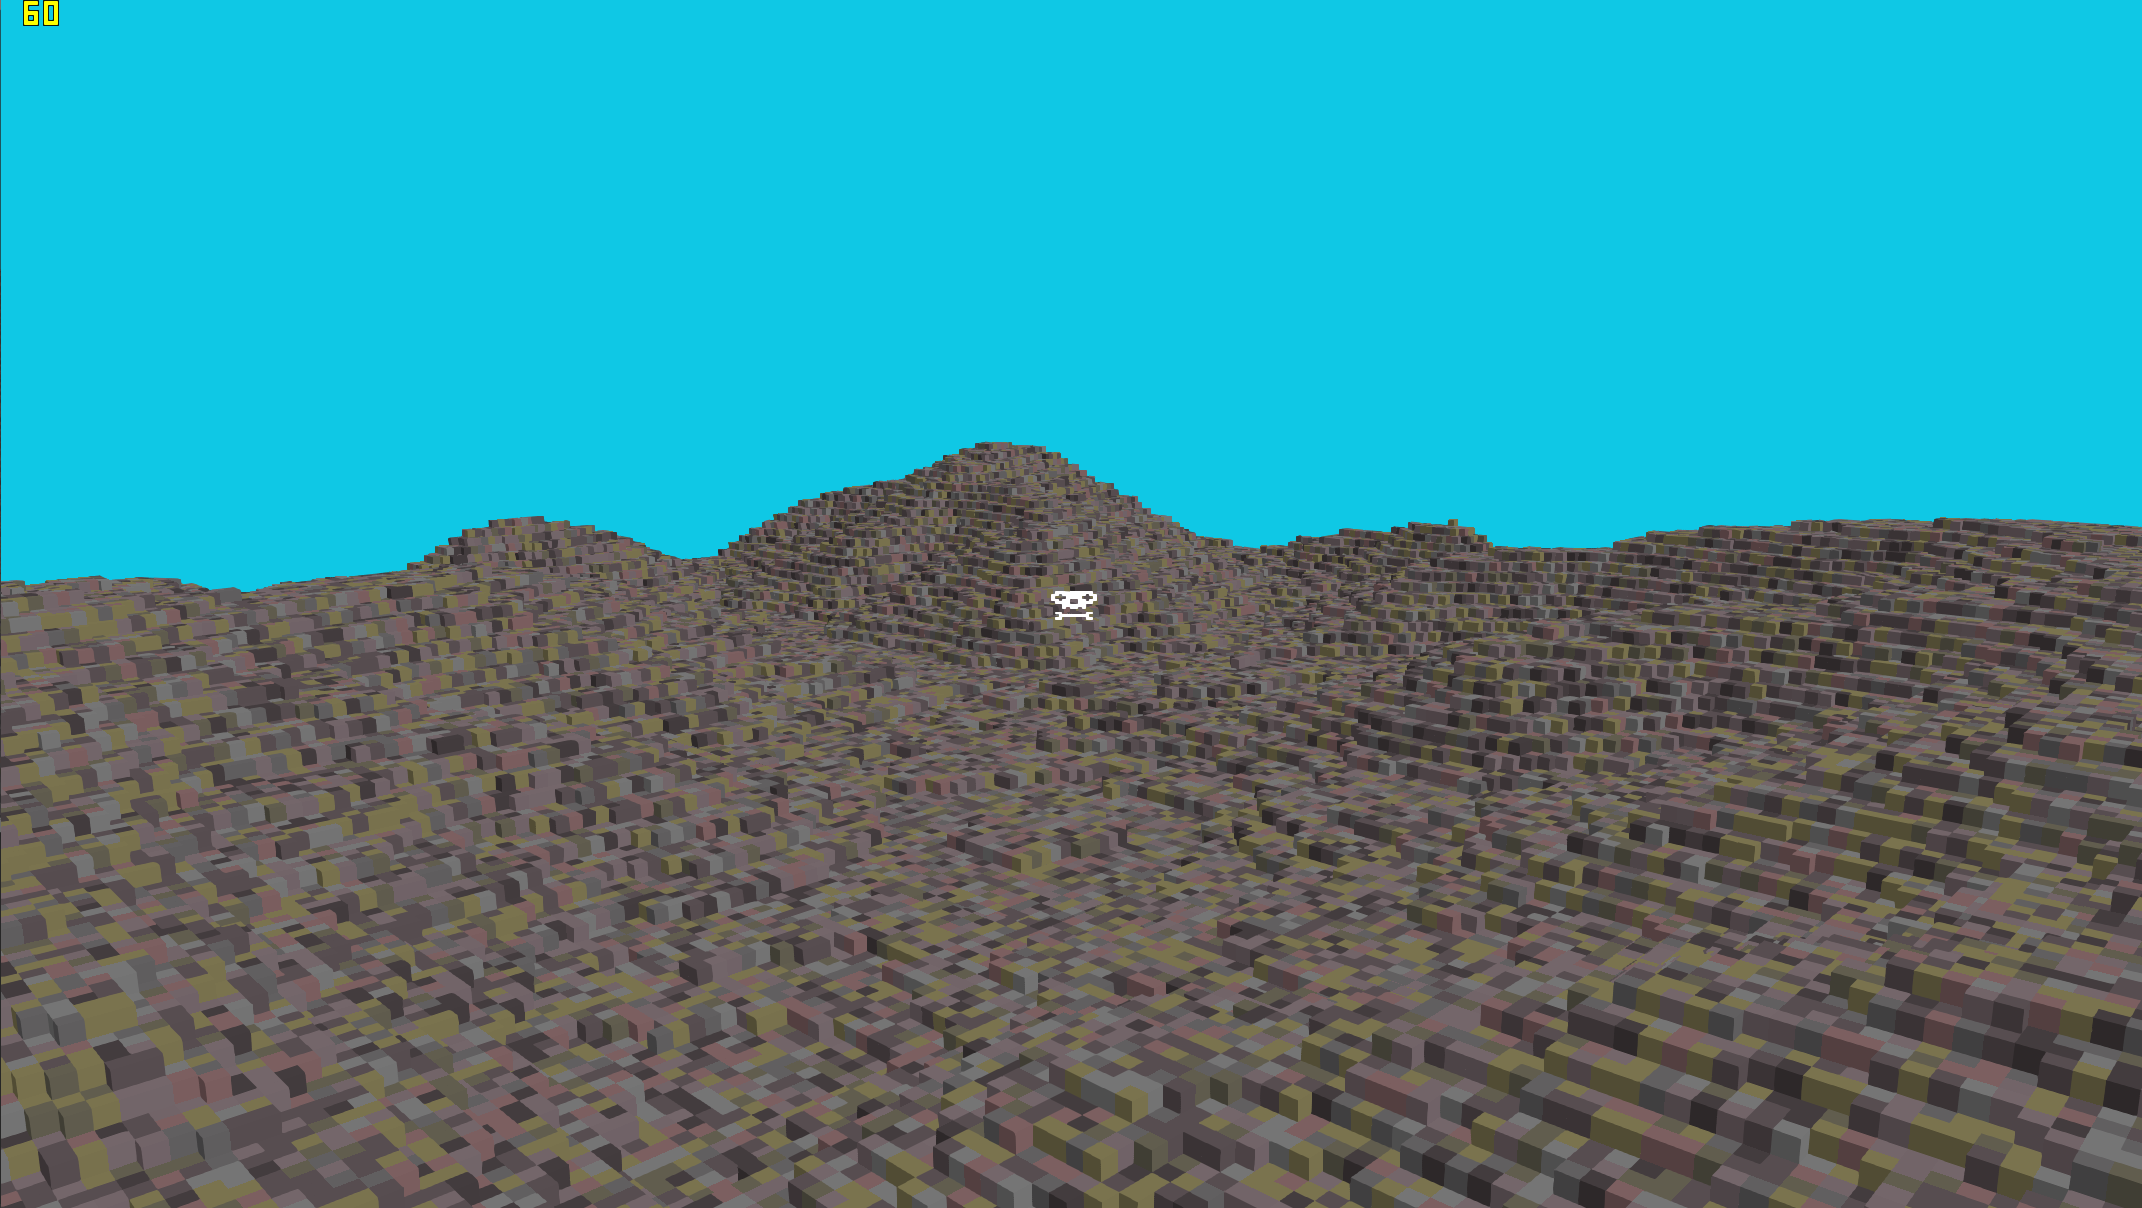 voxel engine screenshot with a barren desert scene (screenshot)